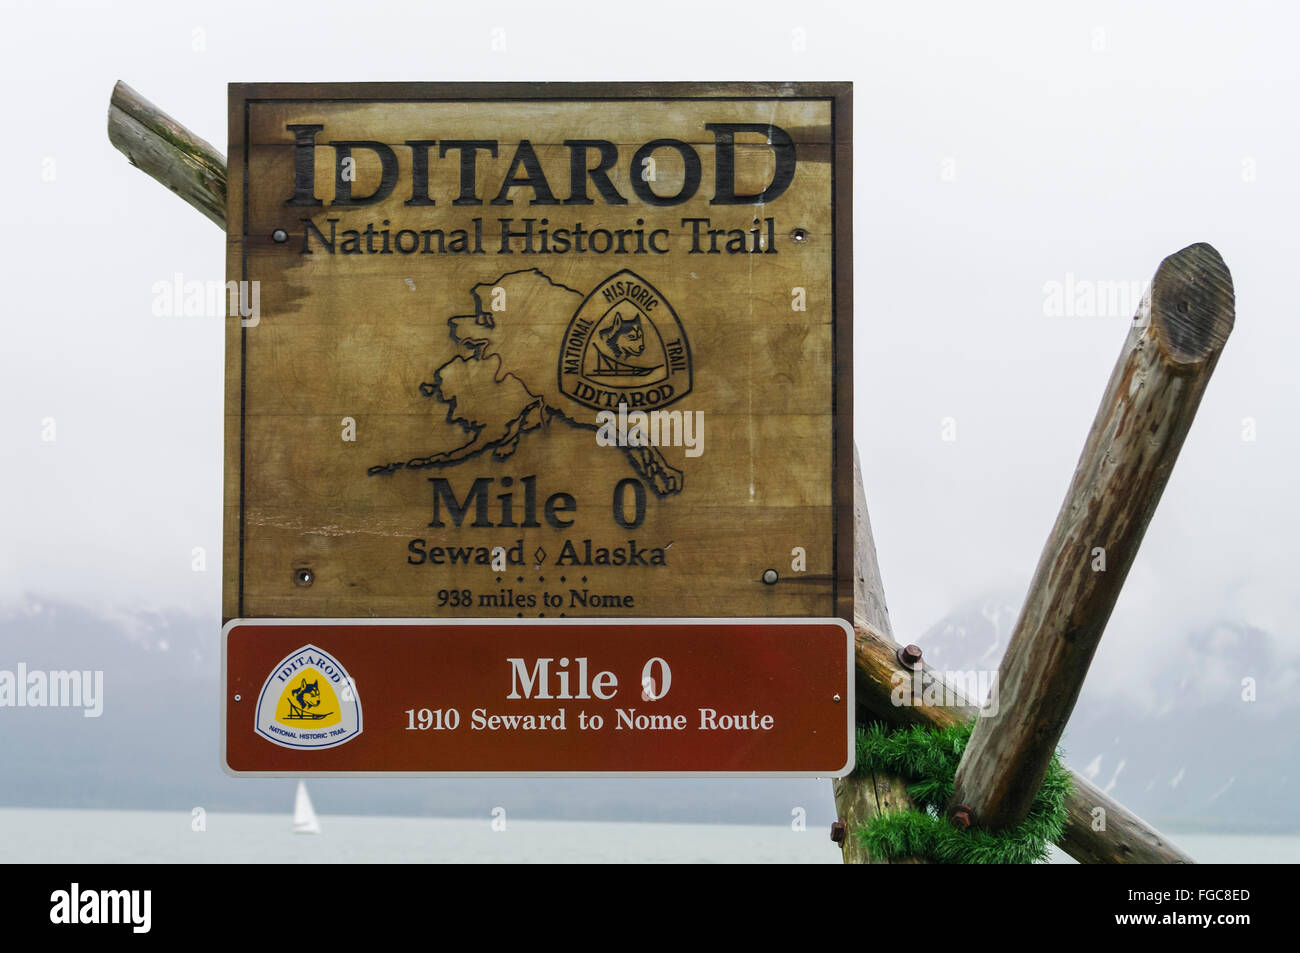 Iditarod national historic trail from Seward to Nome trail marker. Placed at Mile 0 in Seward, Alaska, USA. Stock Photo